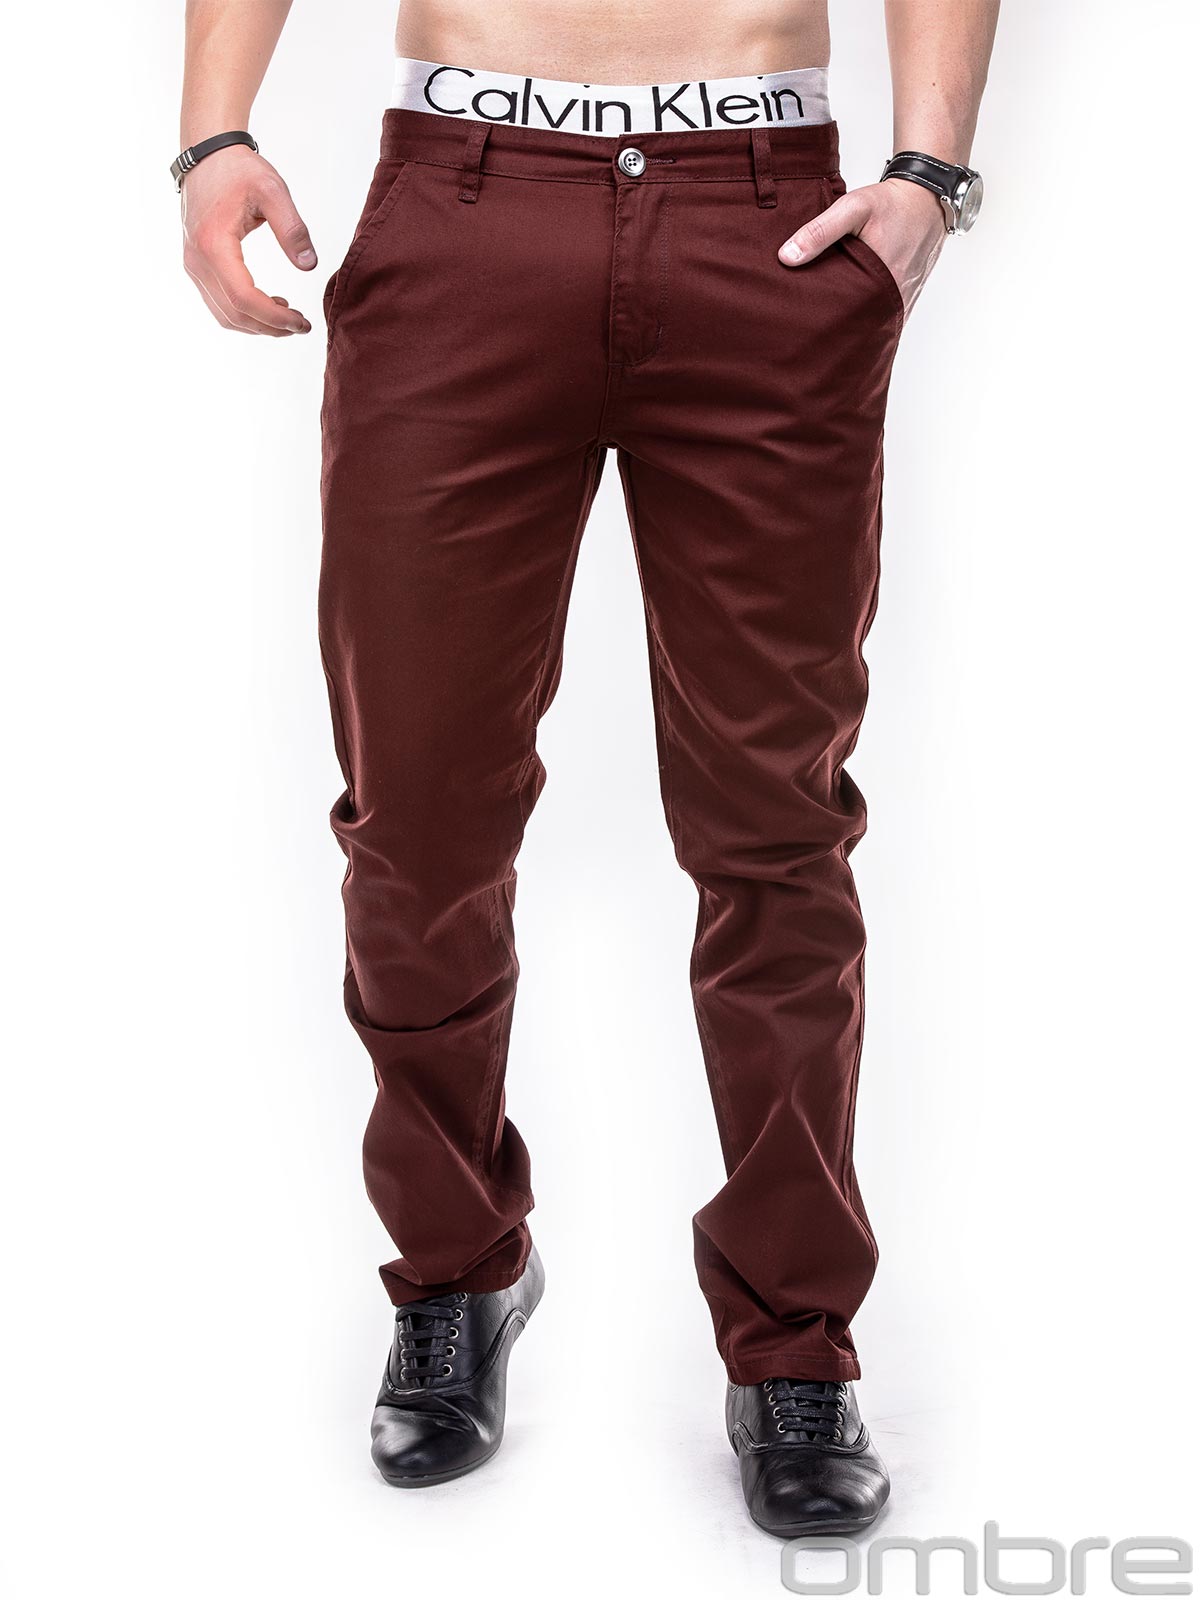 Men's chino pants P135 - burgundy | MODONE wholesale - Clothing For Men